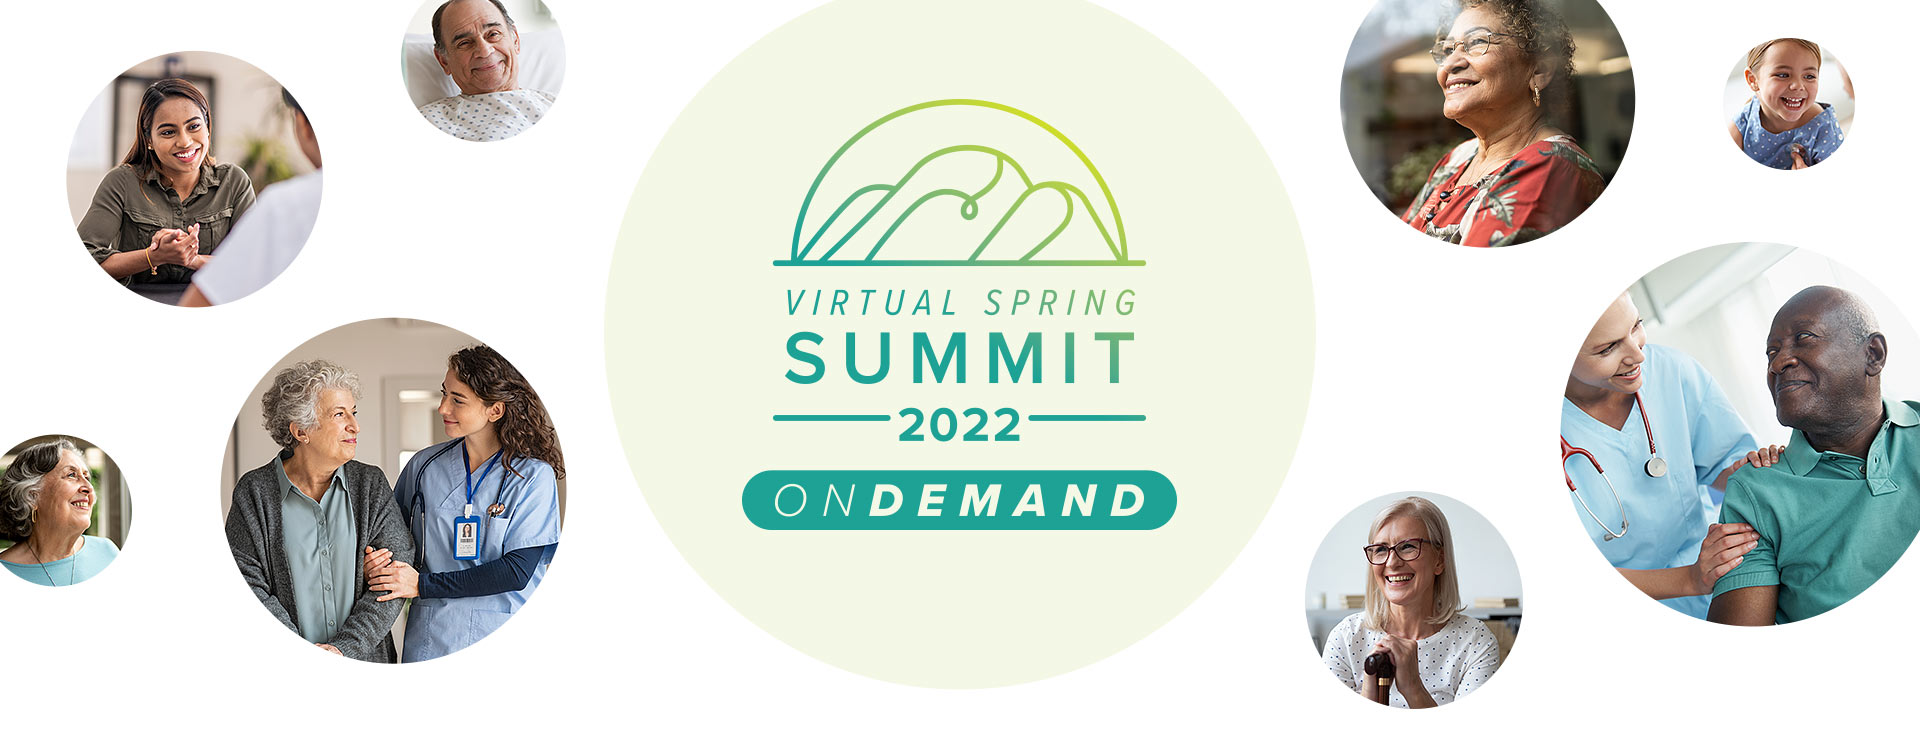 2022 RNS Virtual Spring Summit OnDemand